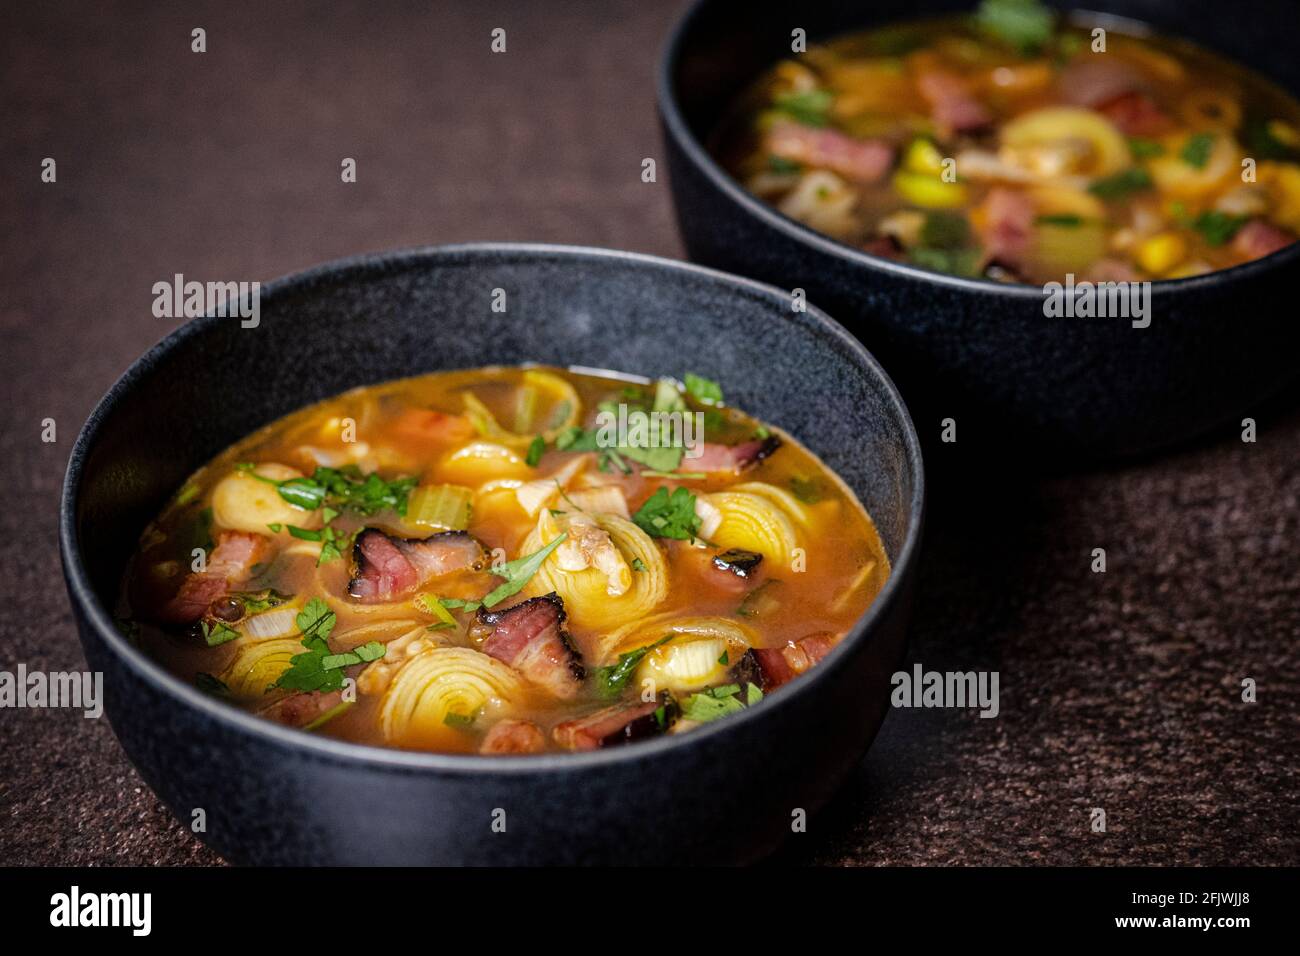 Clams, smoked pork belly, leek and potato soup Stock Photo